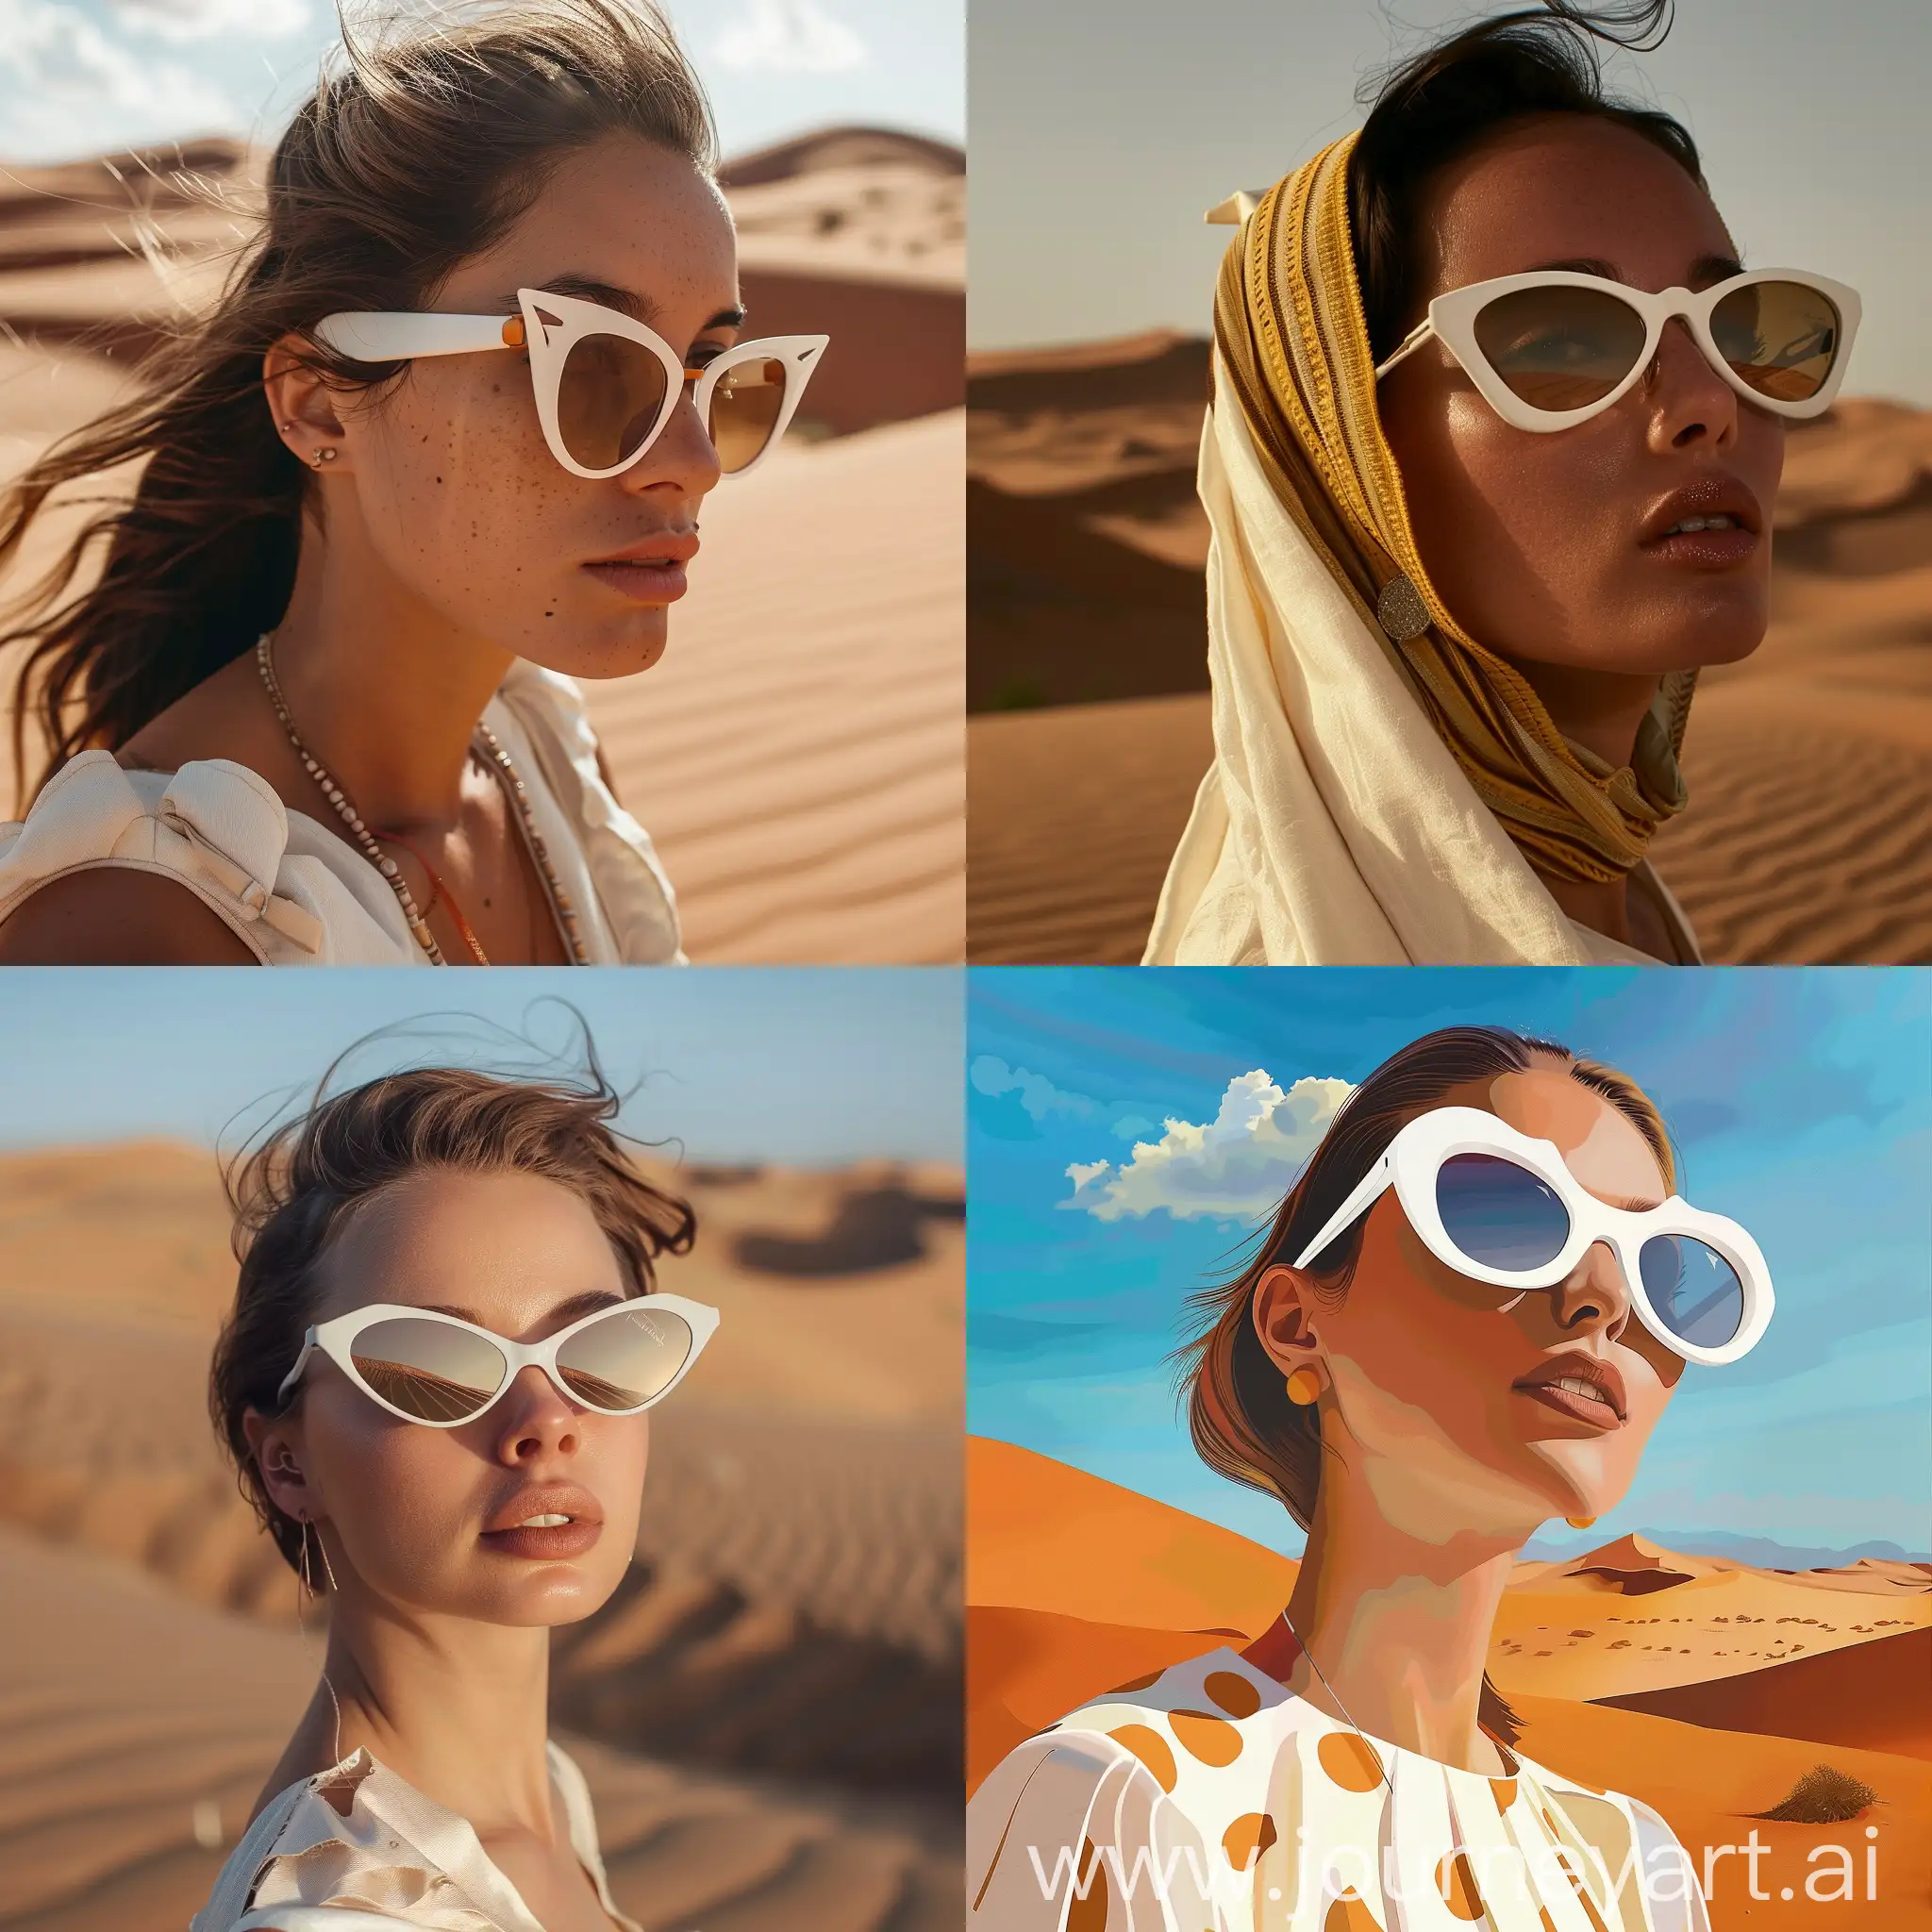 Stylish-Woman-Wearing-White-Sunglasses-in-Desert-Landscape